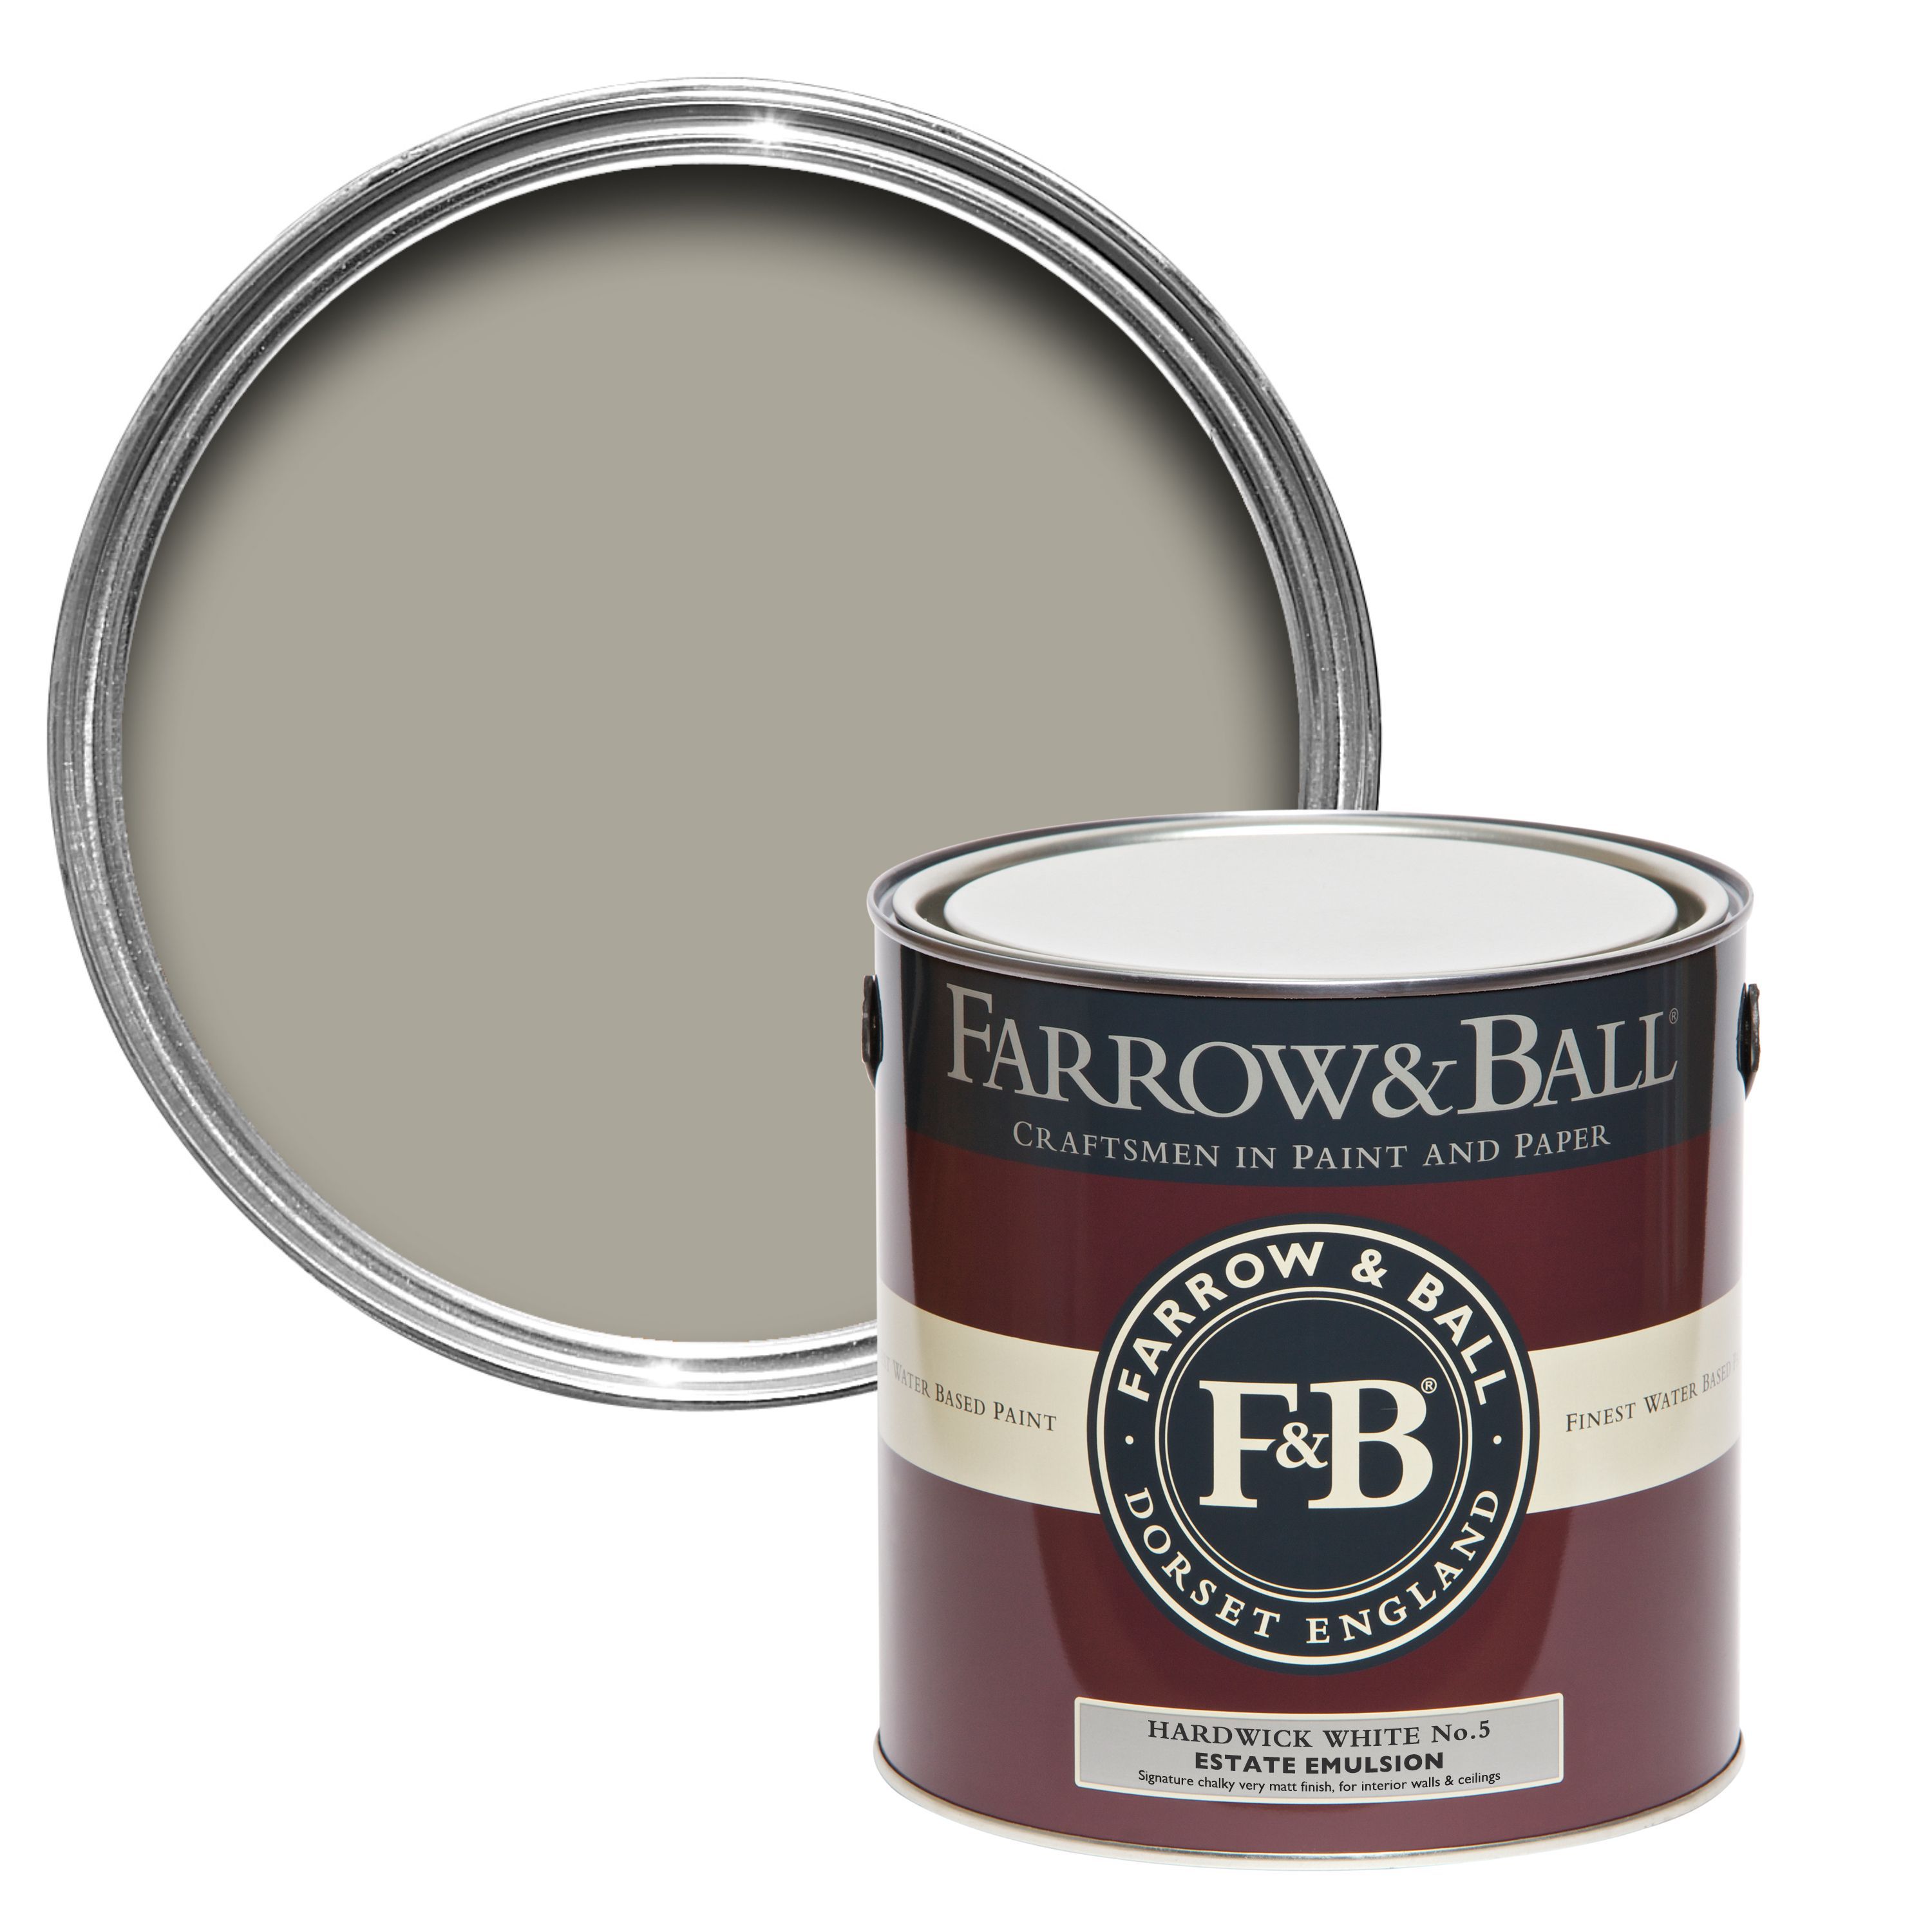 Farrow & Ball Estate Hardwick white No.5 Matt Emulsion paint, 2.5L Tester pot